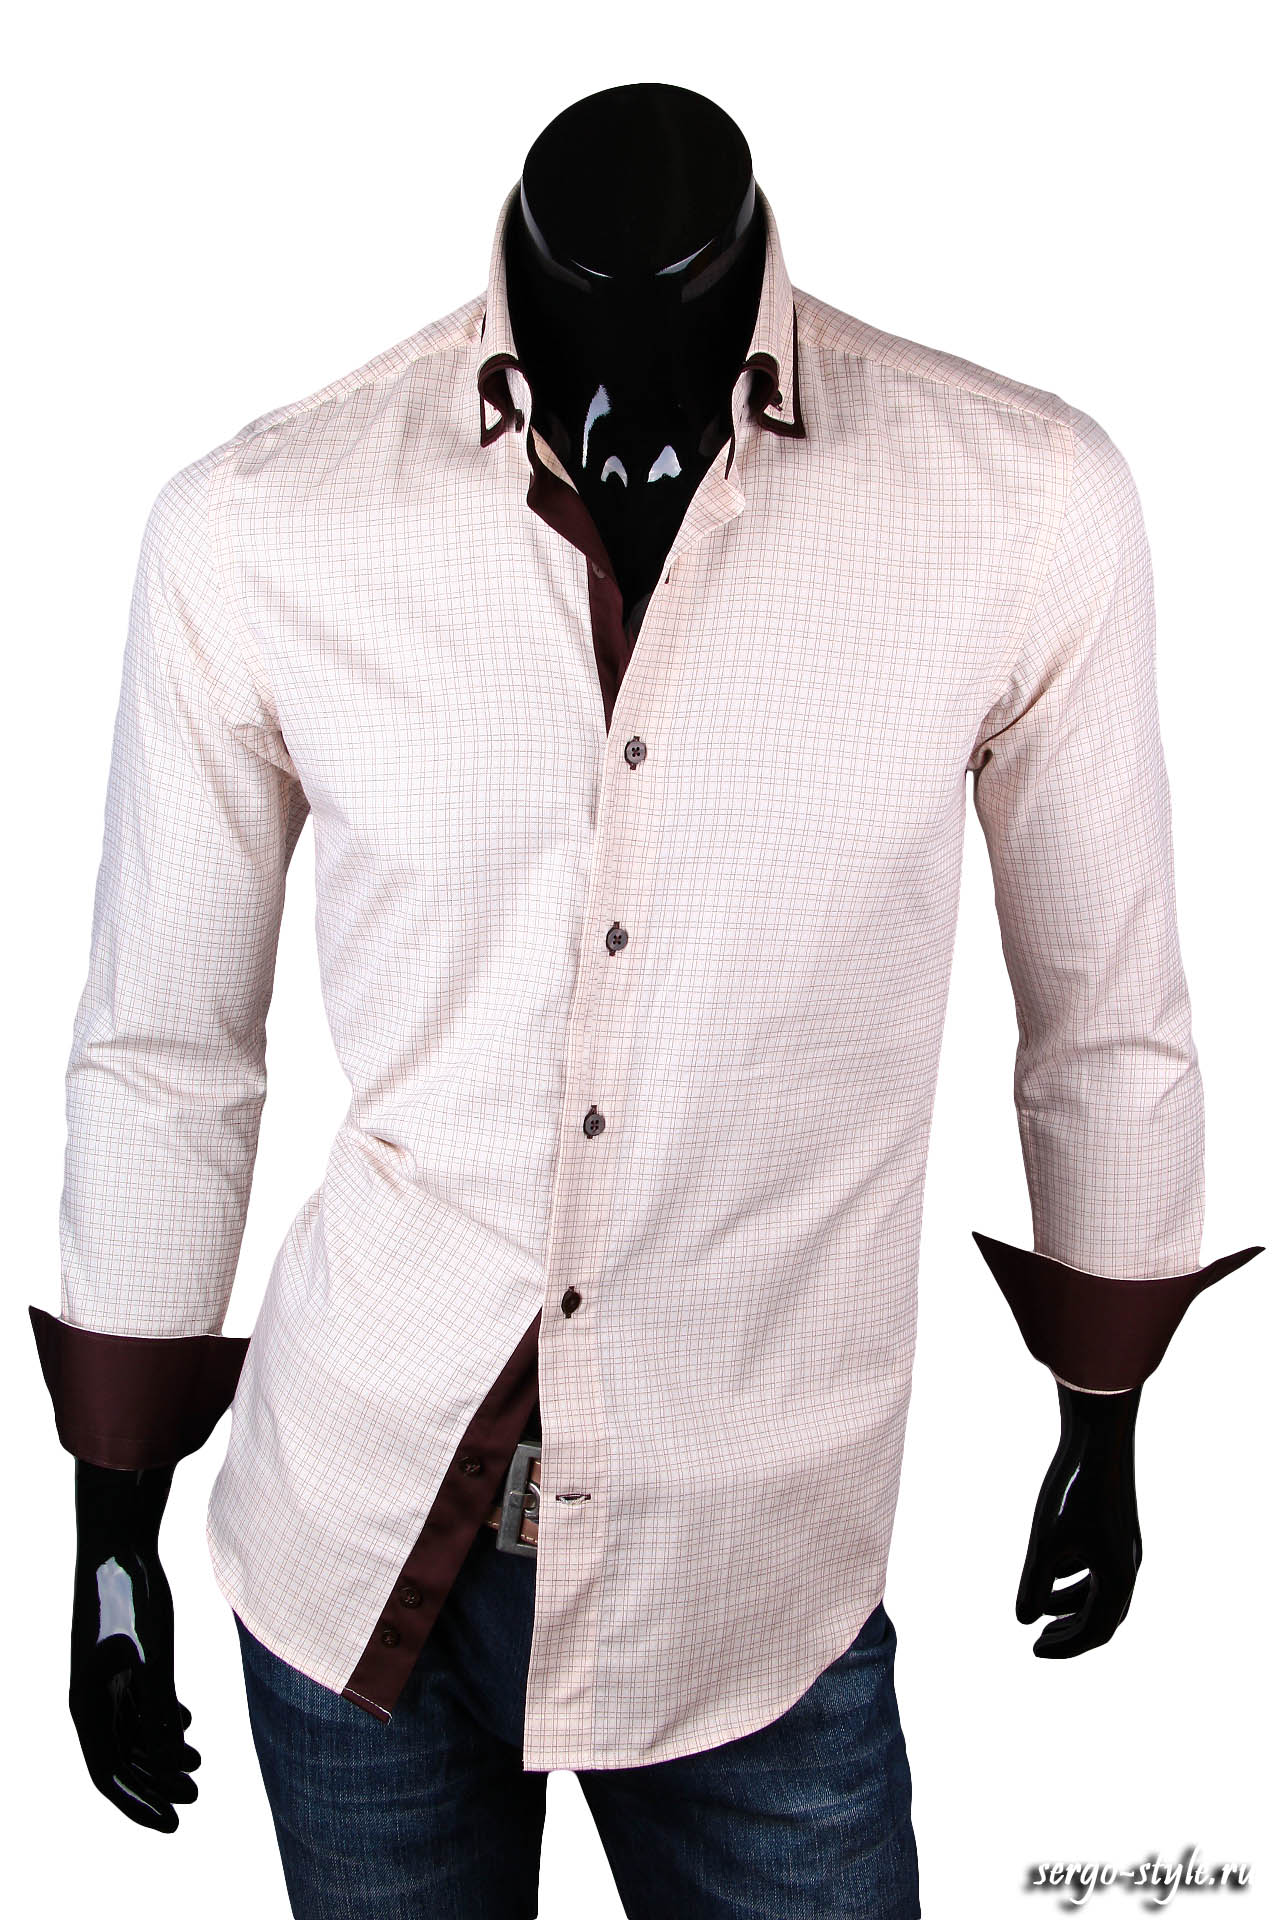 Приталенная мужская рубашка Venturo артикул 7311-02